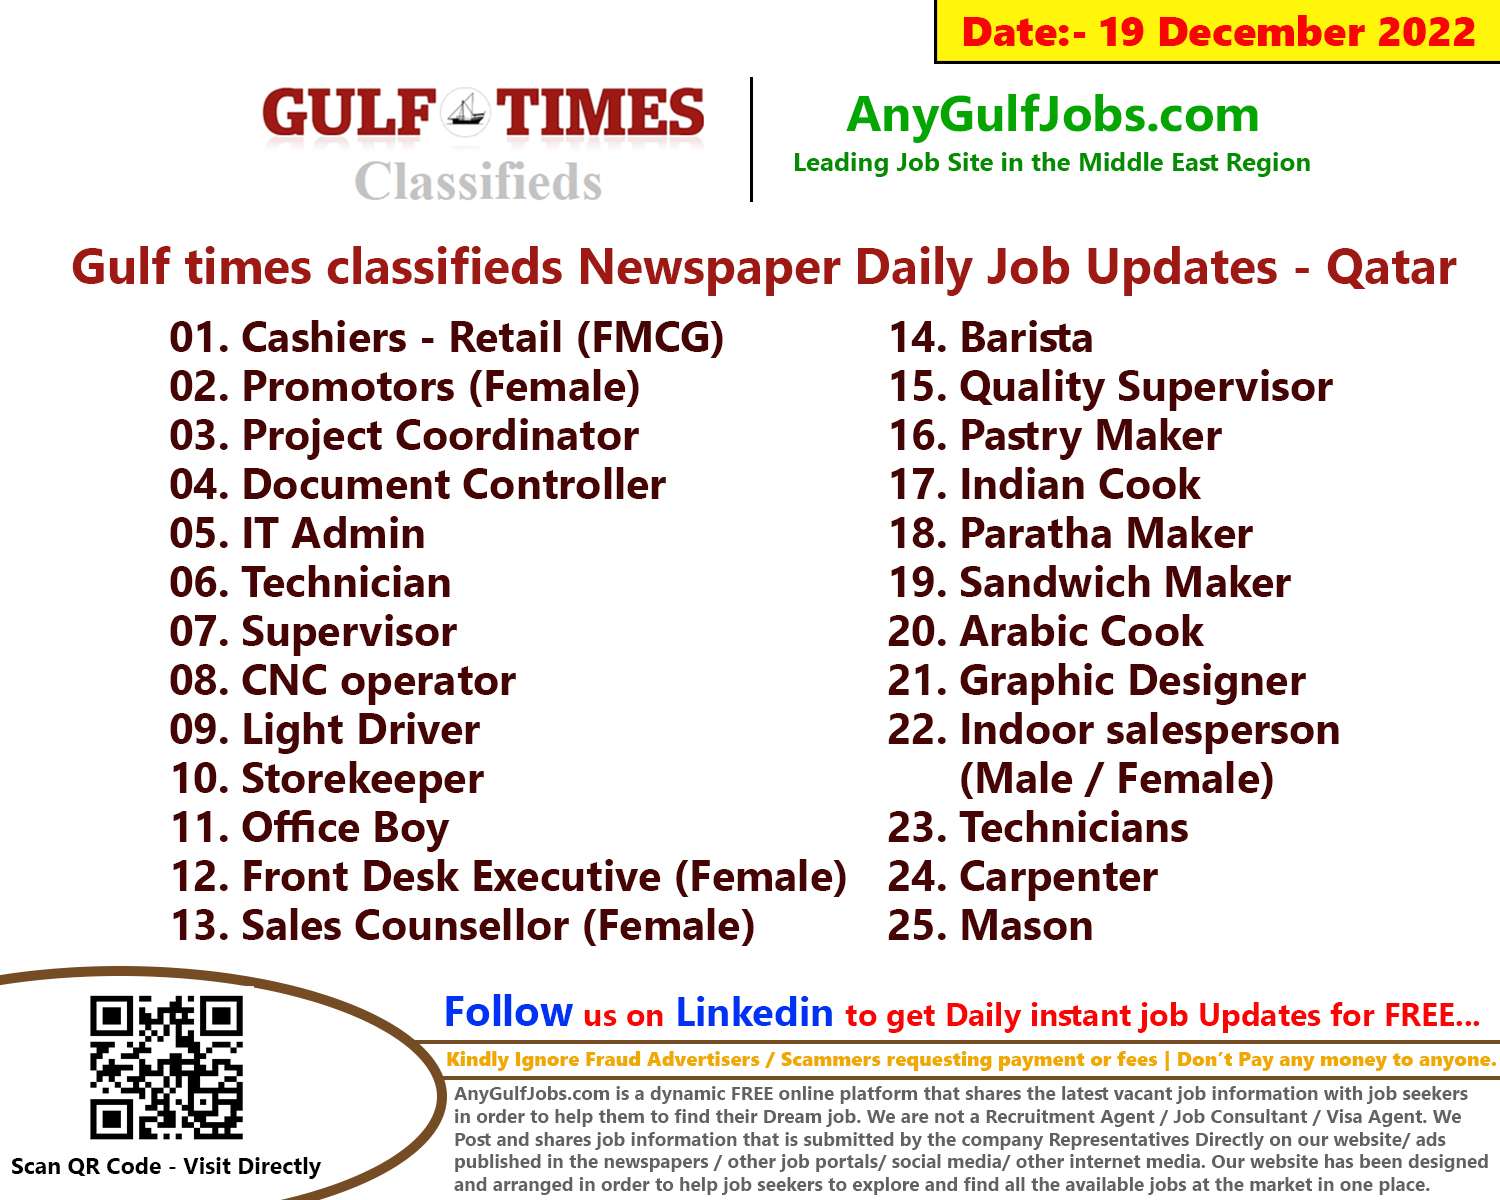 Gulf times classifieds Job Vacancies Qatar - 19 December 2022